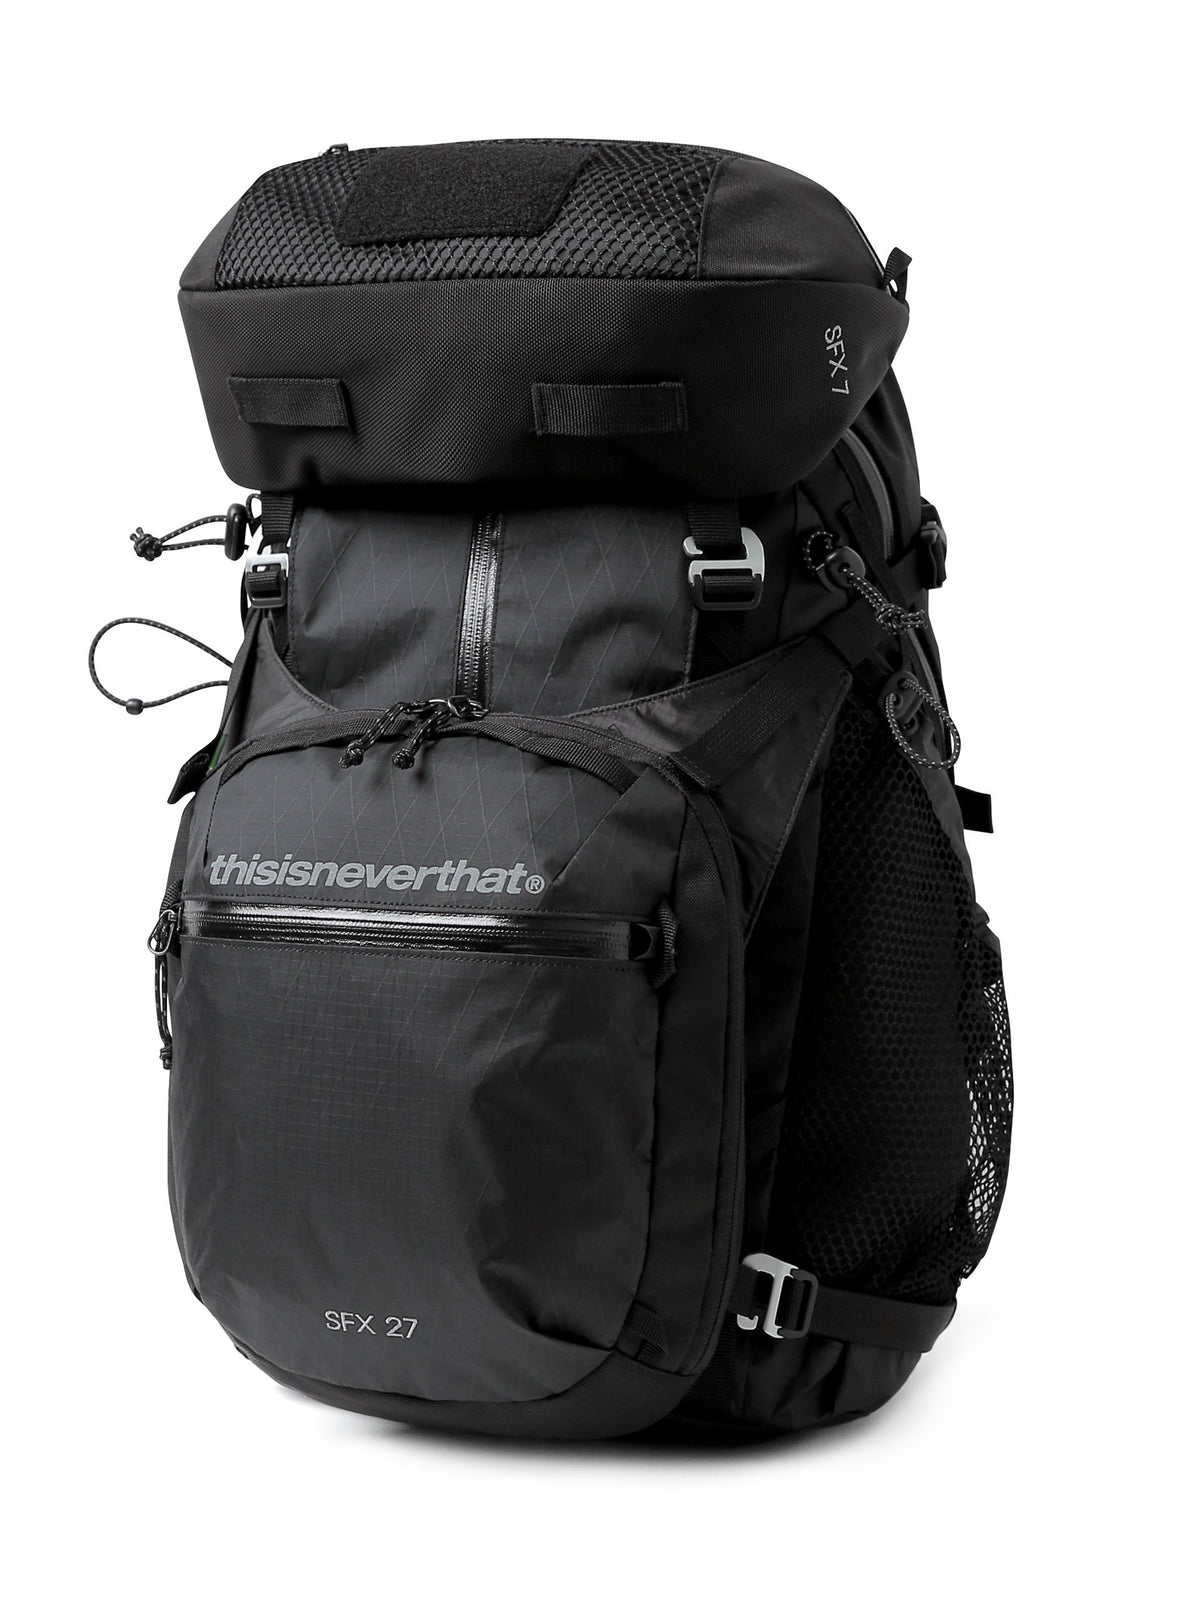 SFX 27 Backpack Bag